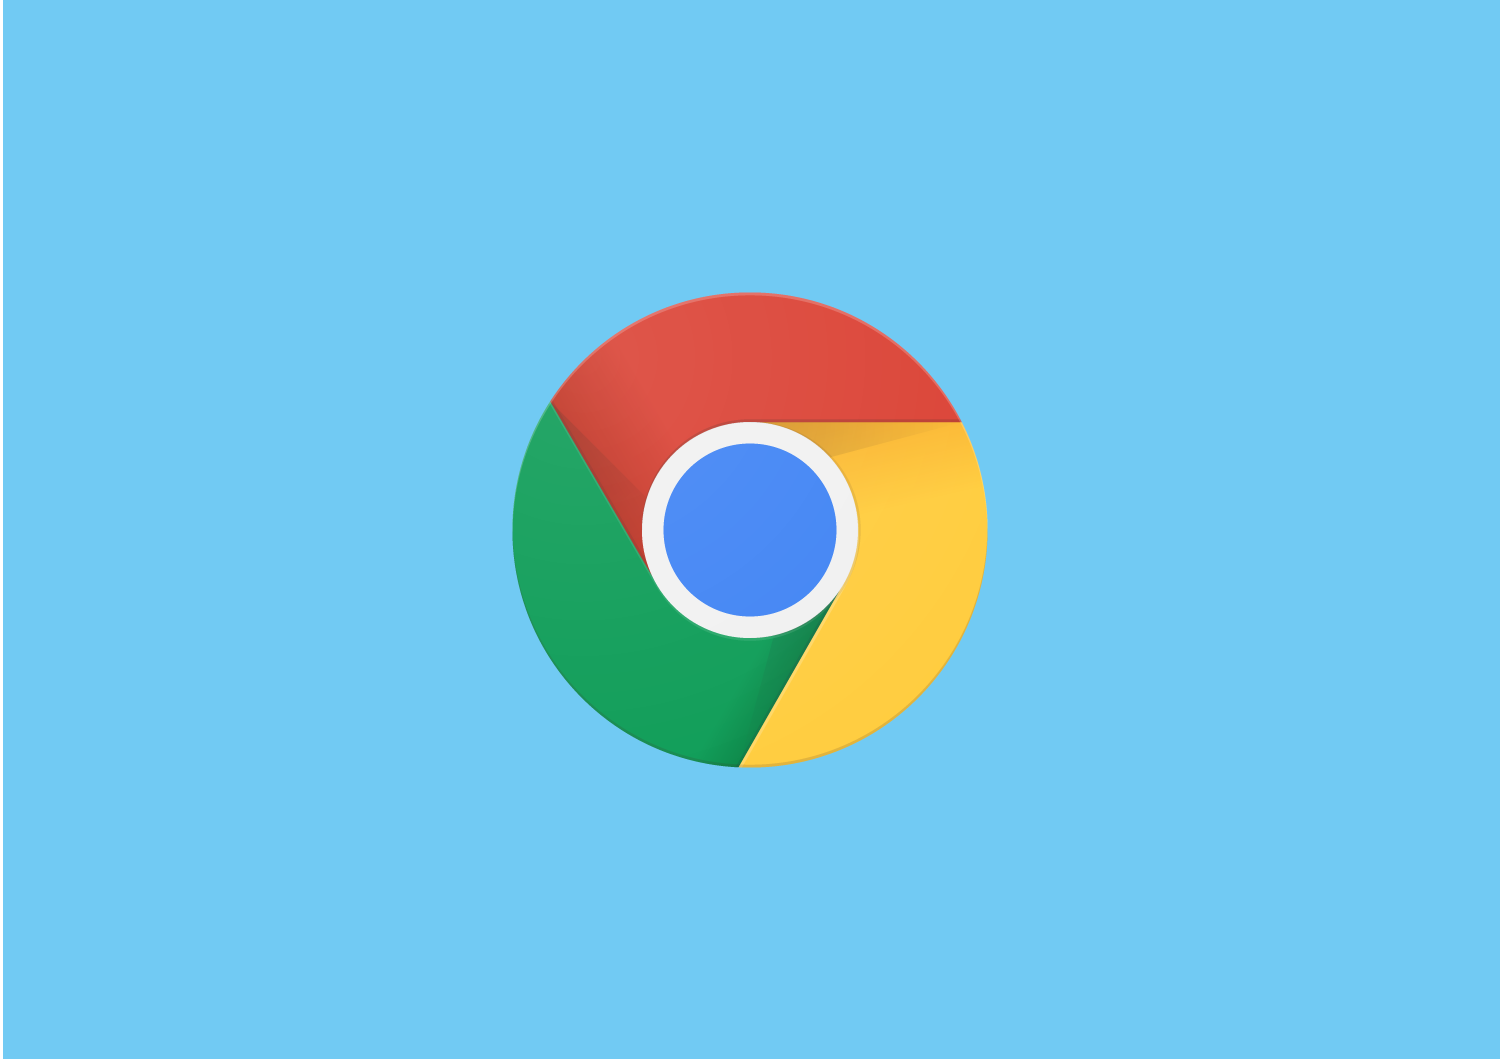 Chrome markiert ab sofort HTTP-Websites als "not secure"